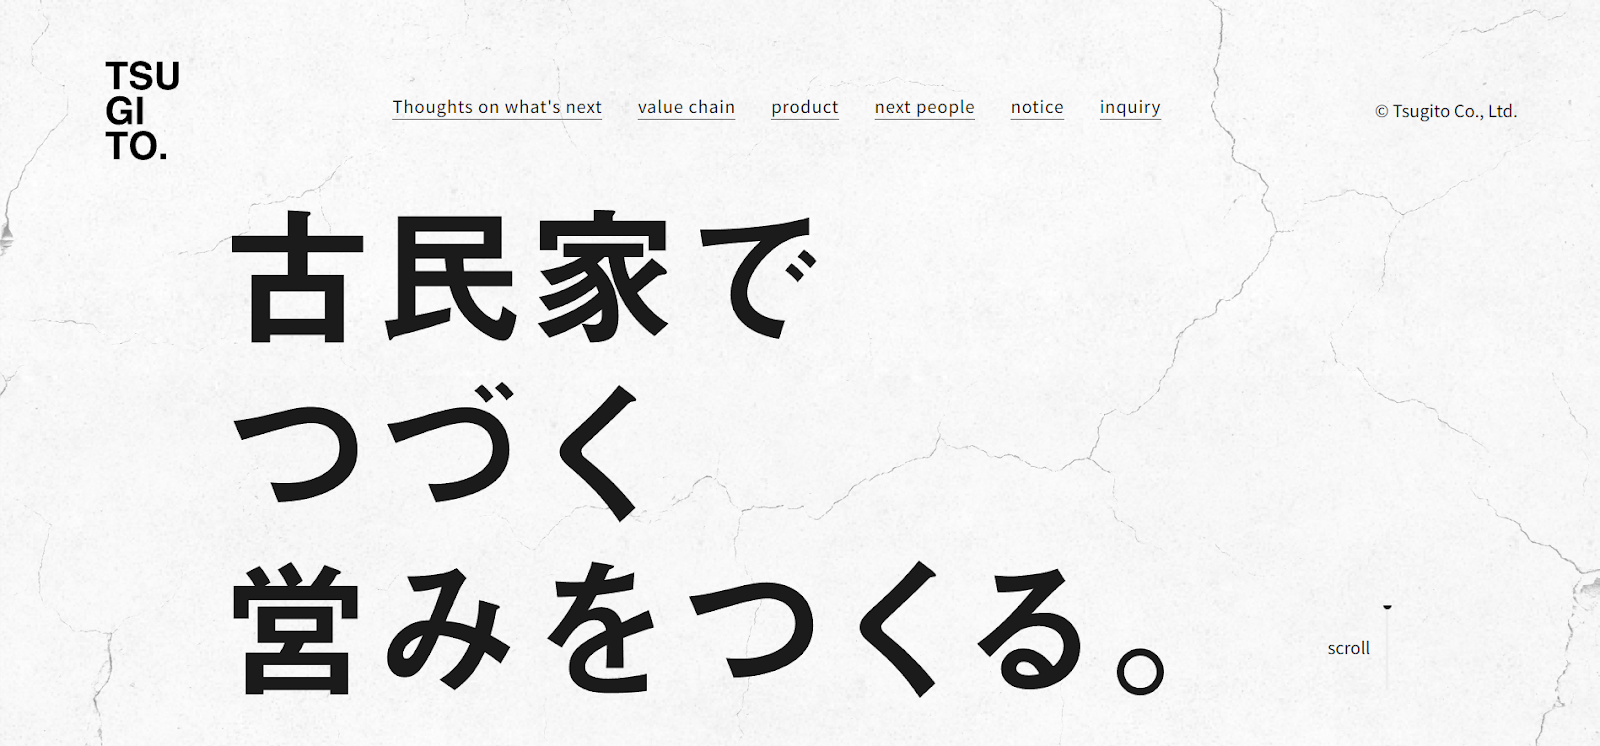 hotel website examples, Tsugito